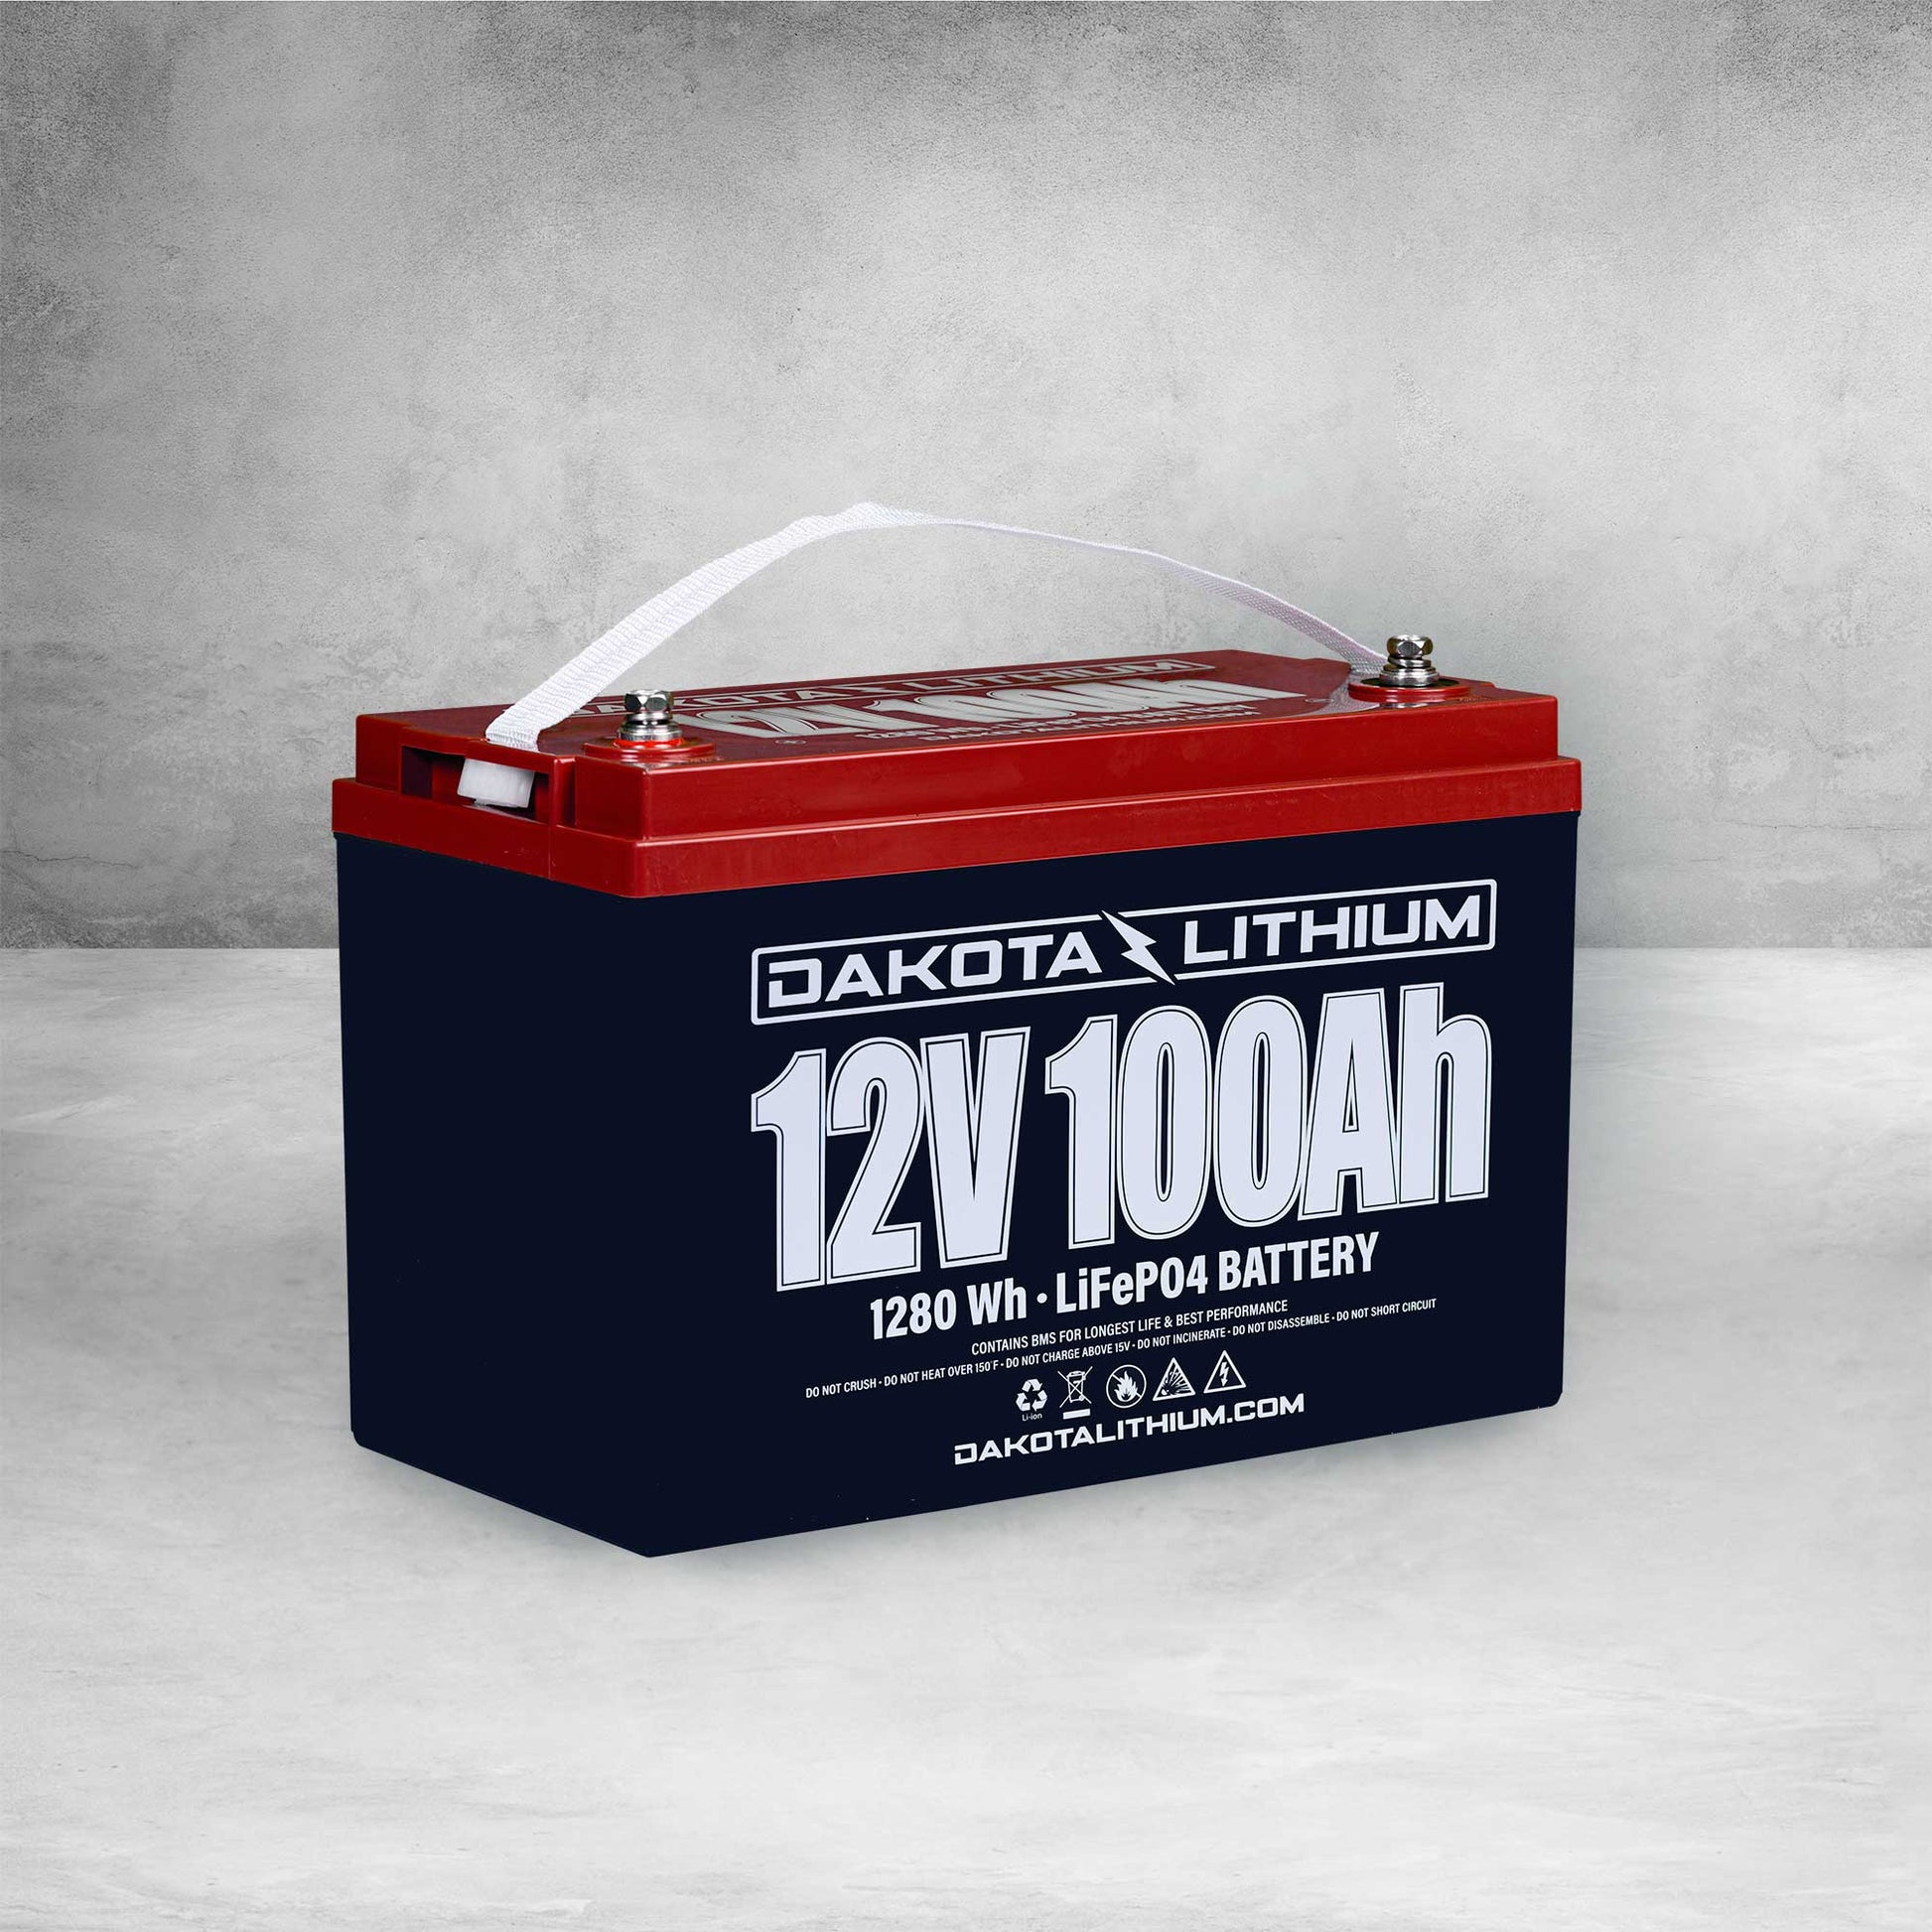 Dakota Lithium Battery 12V 100Ah DEEP CYCLE LIFEPO4 BATTERY